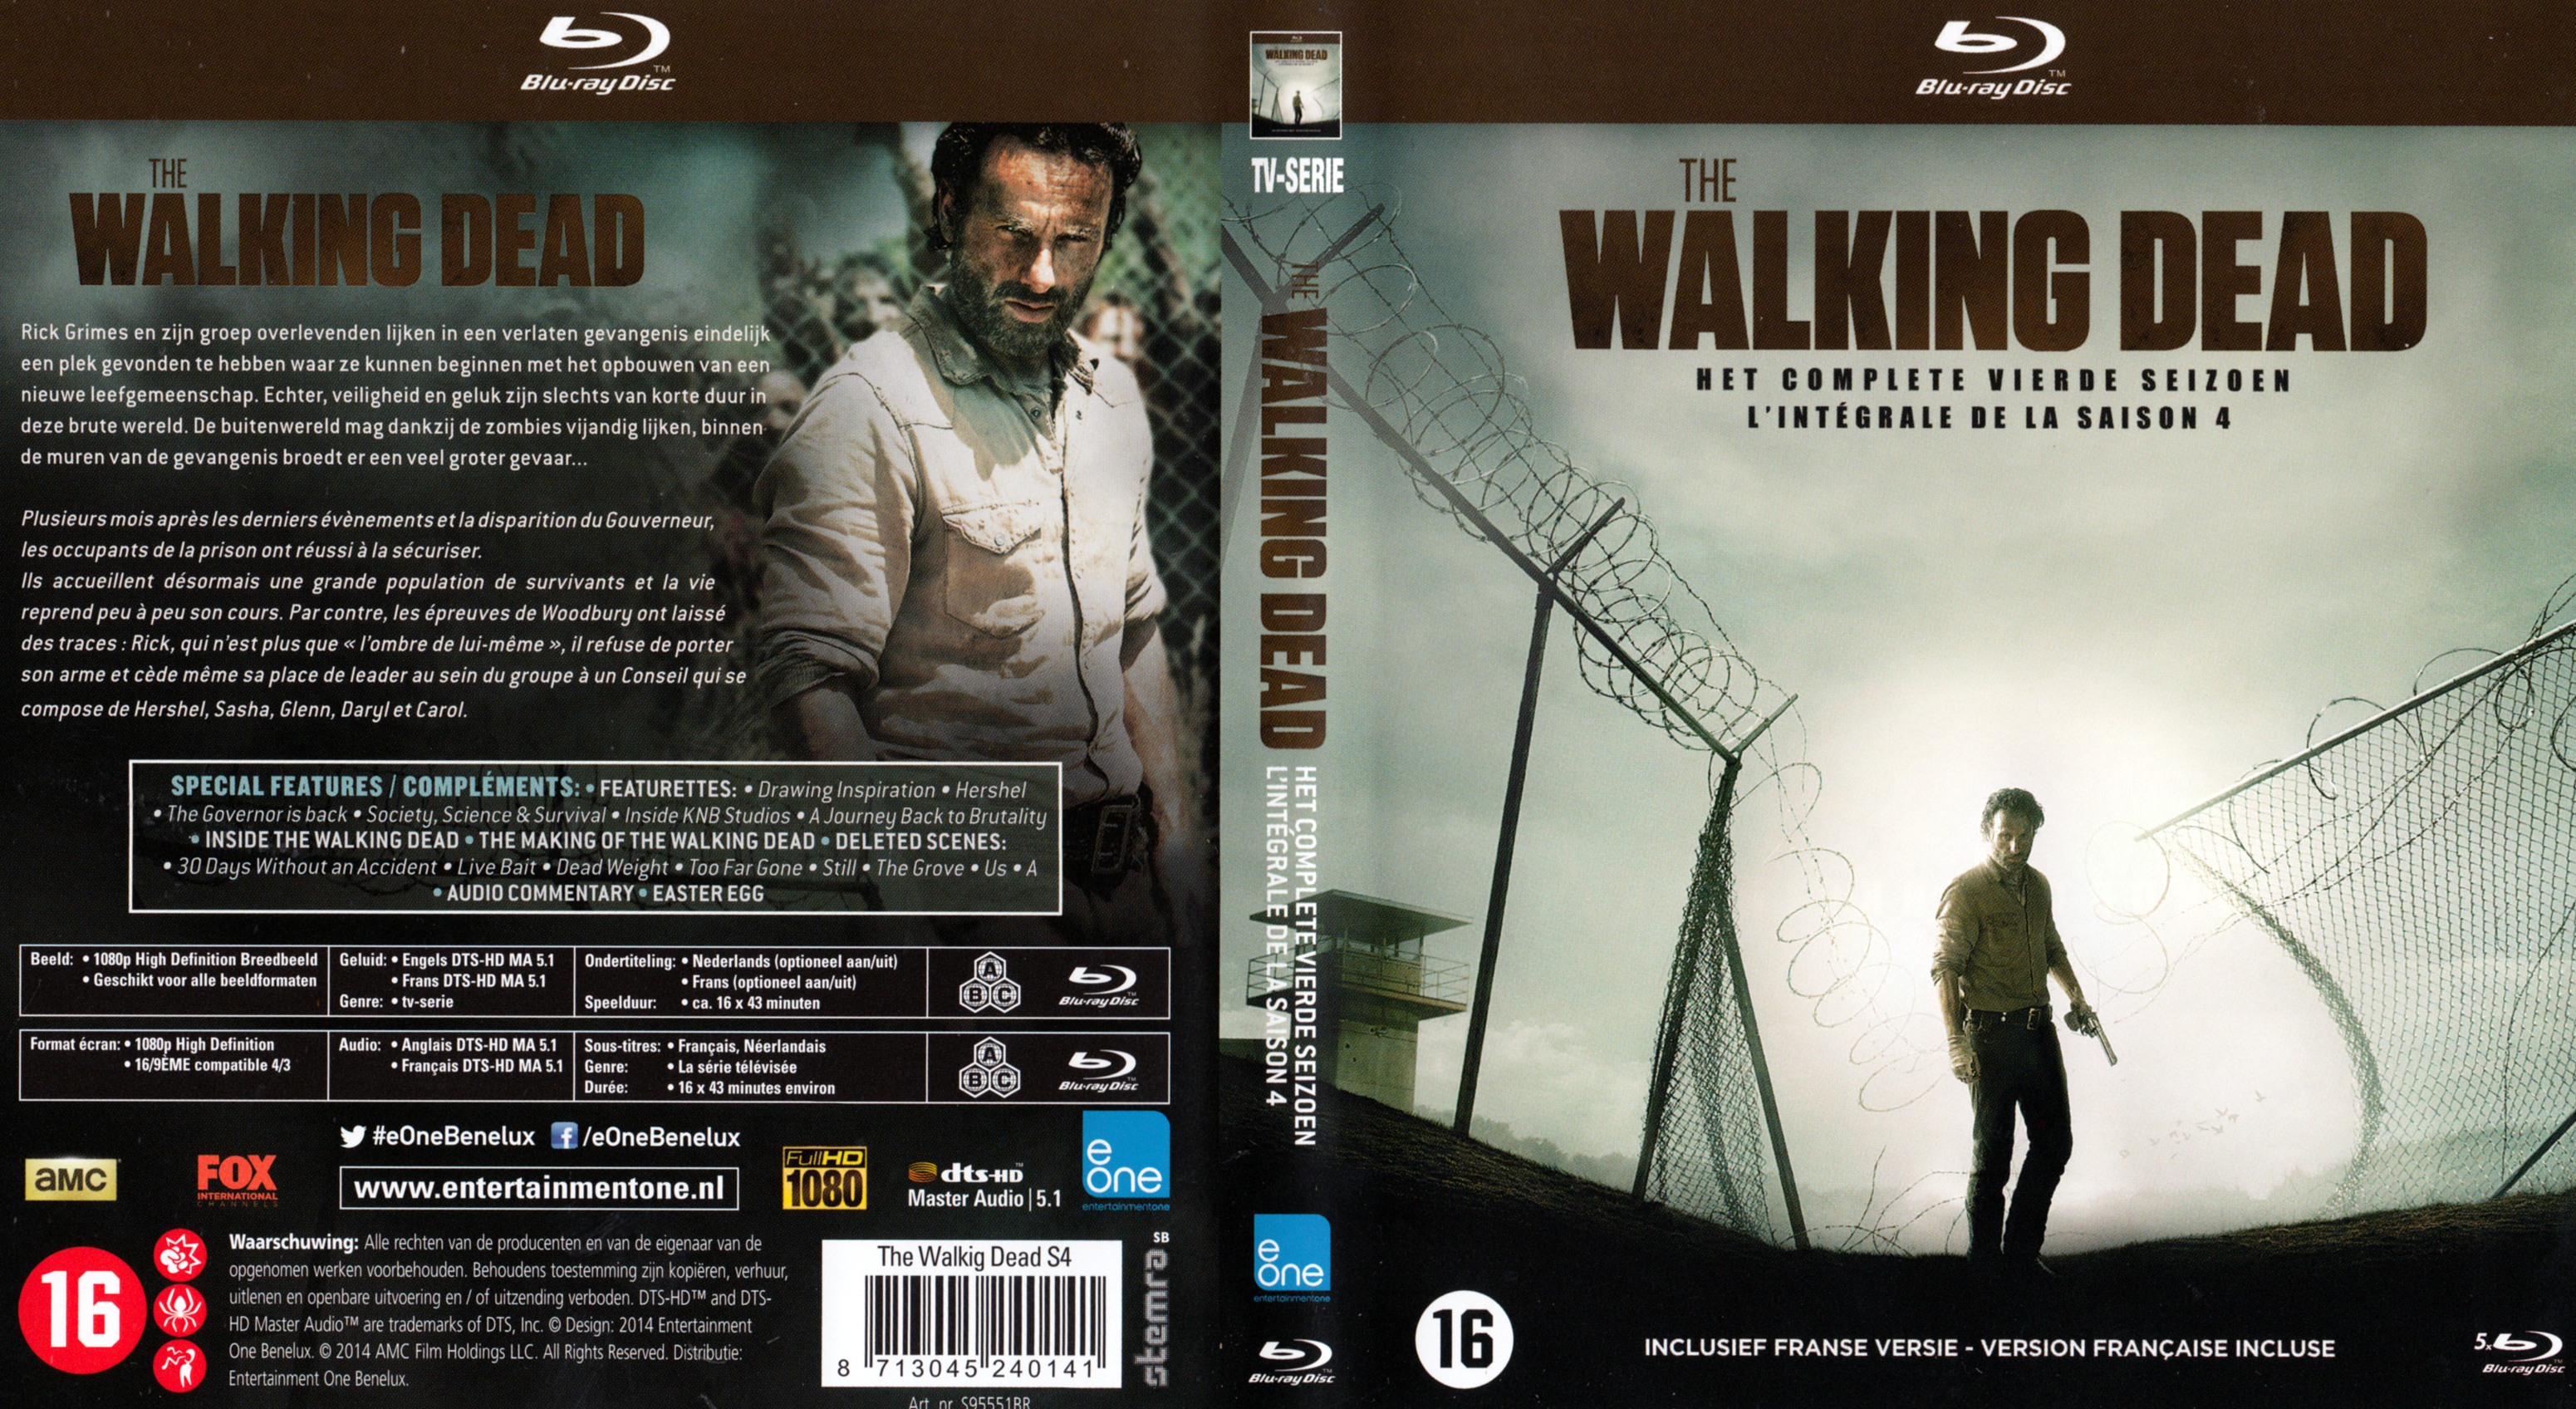 Jaquette DVD The Walking Dead Saison 4 (BLU-RAY) v2